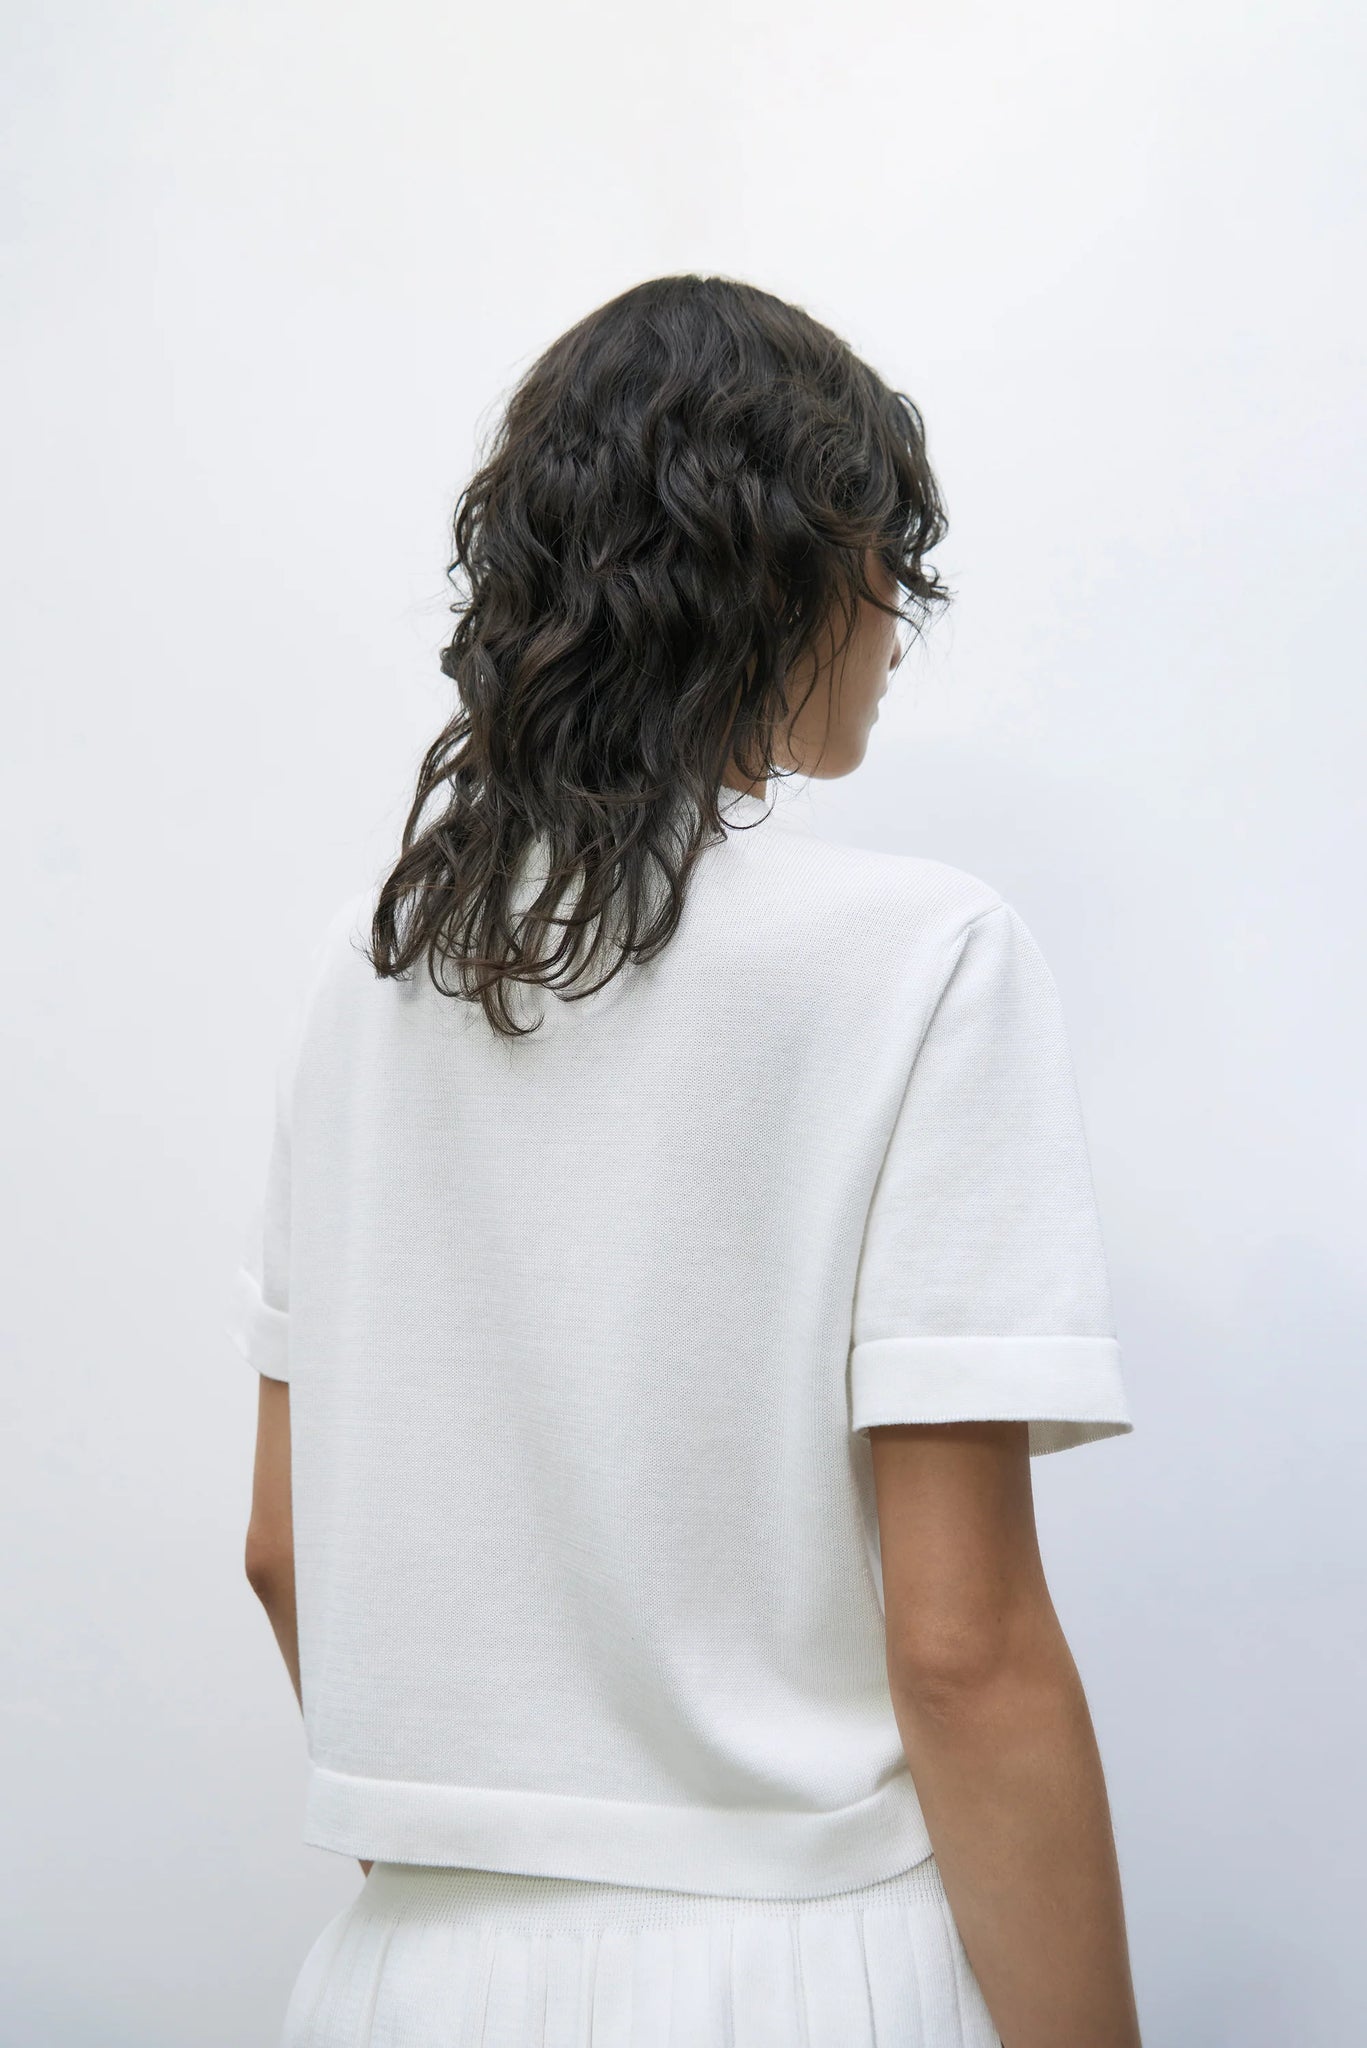 Organic Cotton T Shirt // White